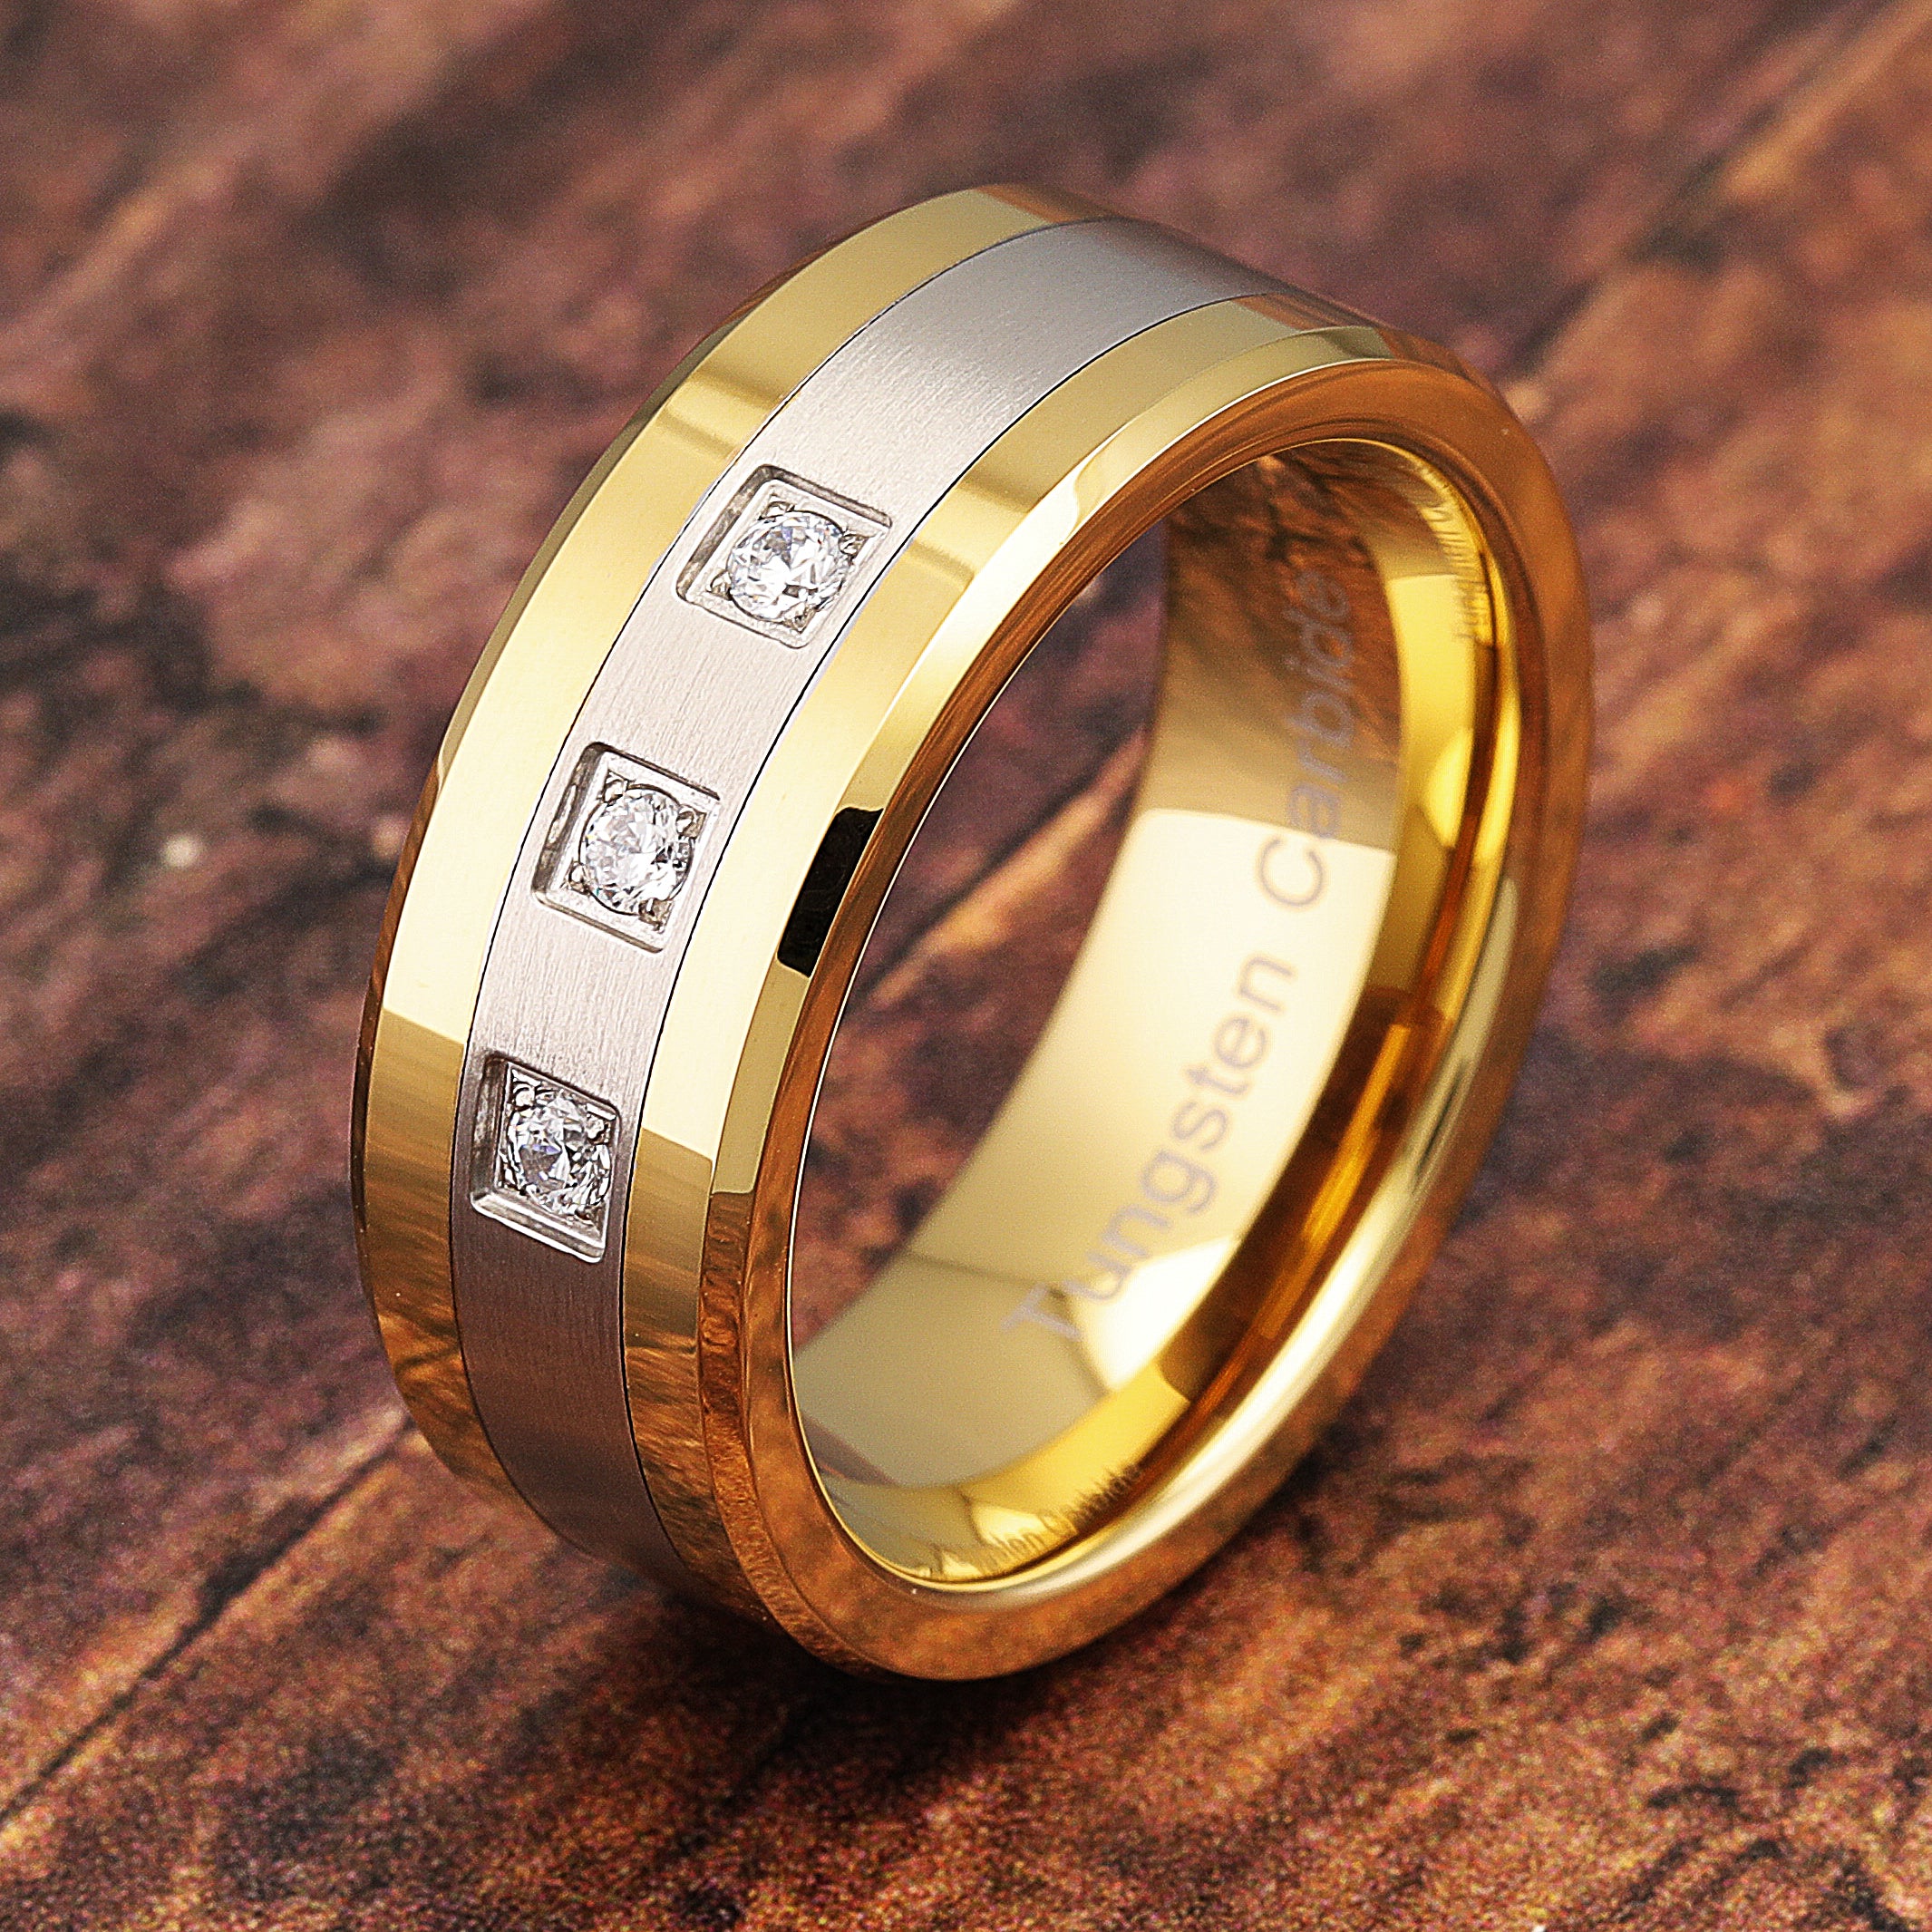 Titanium Men's Wedding Band Engagement Ring with 9 Large Princess Cut Cubic Zirconia